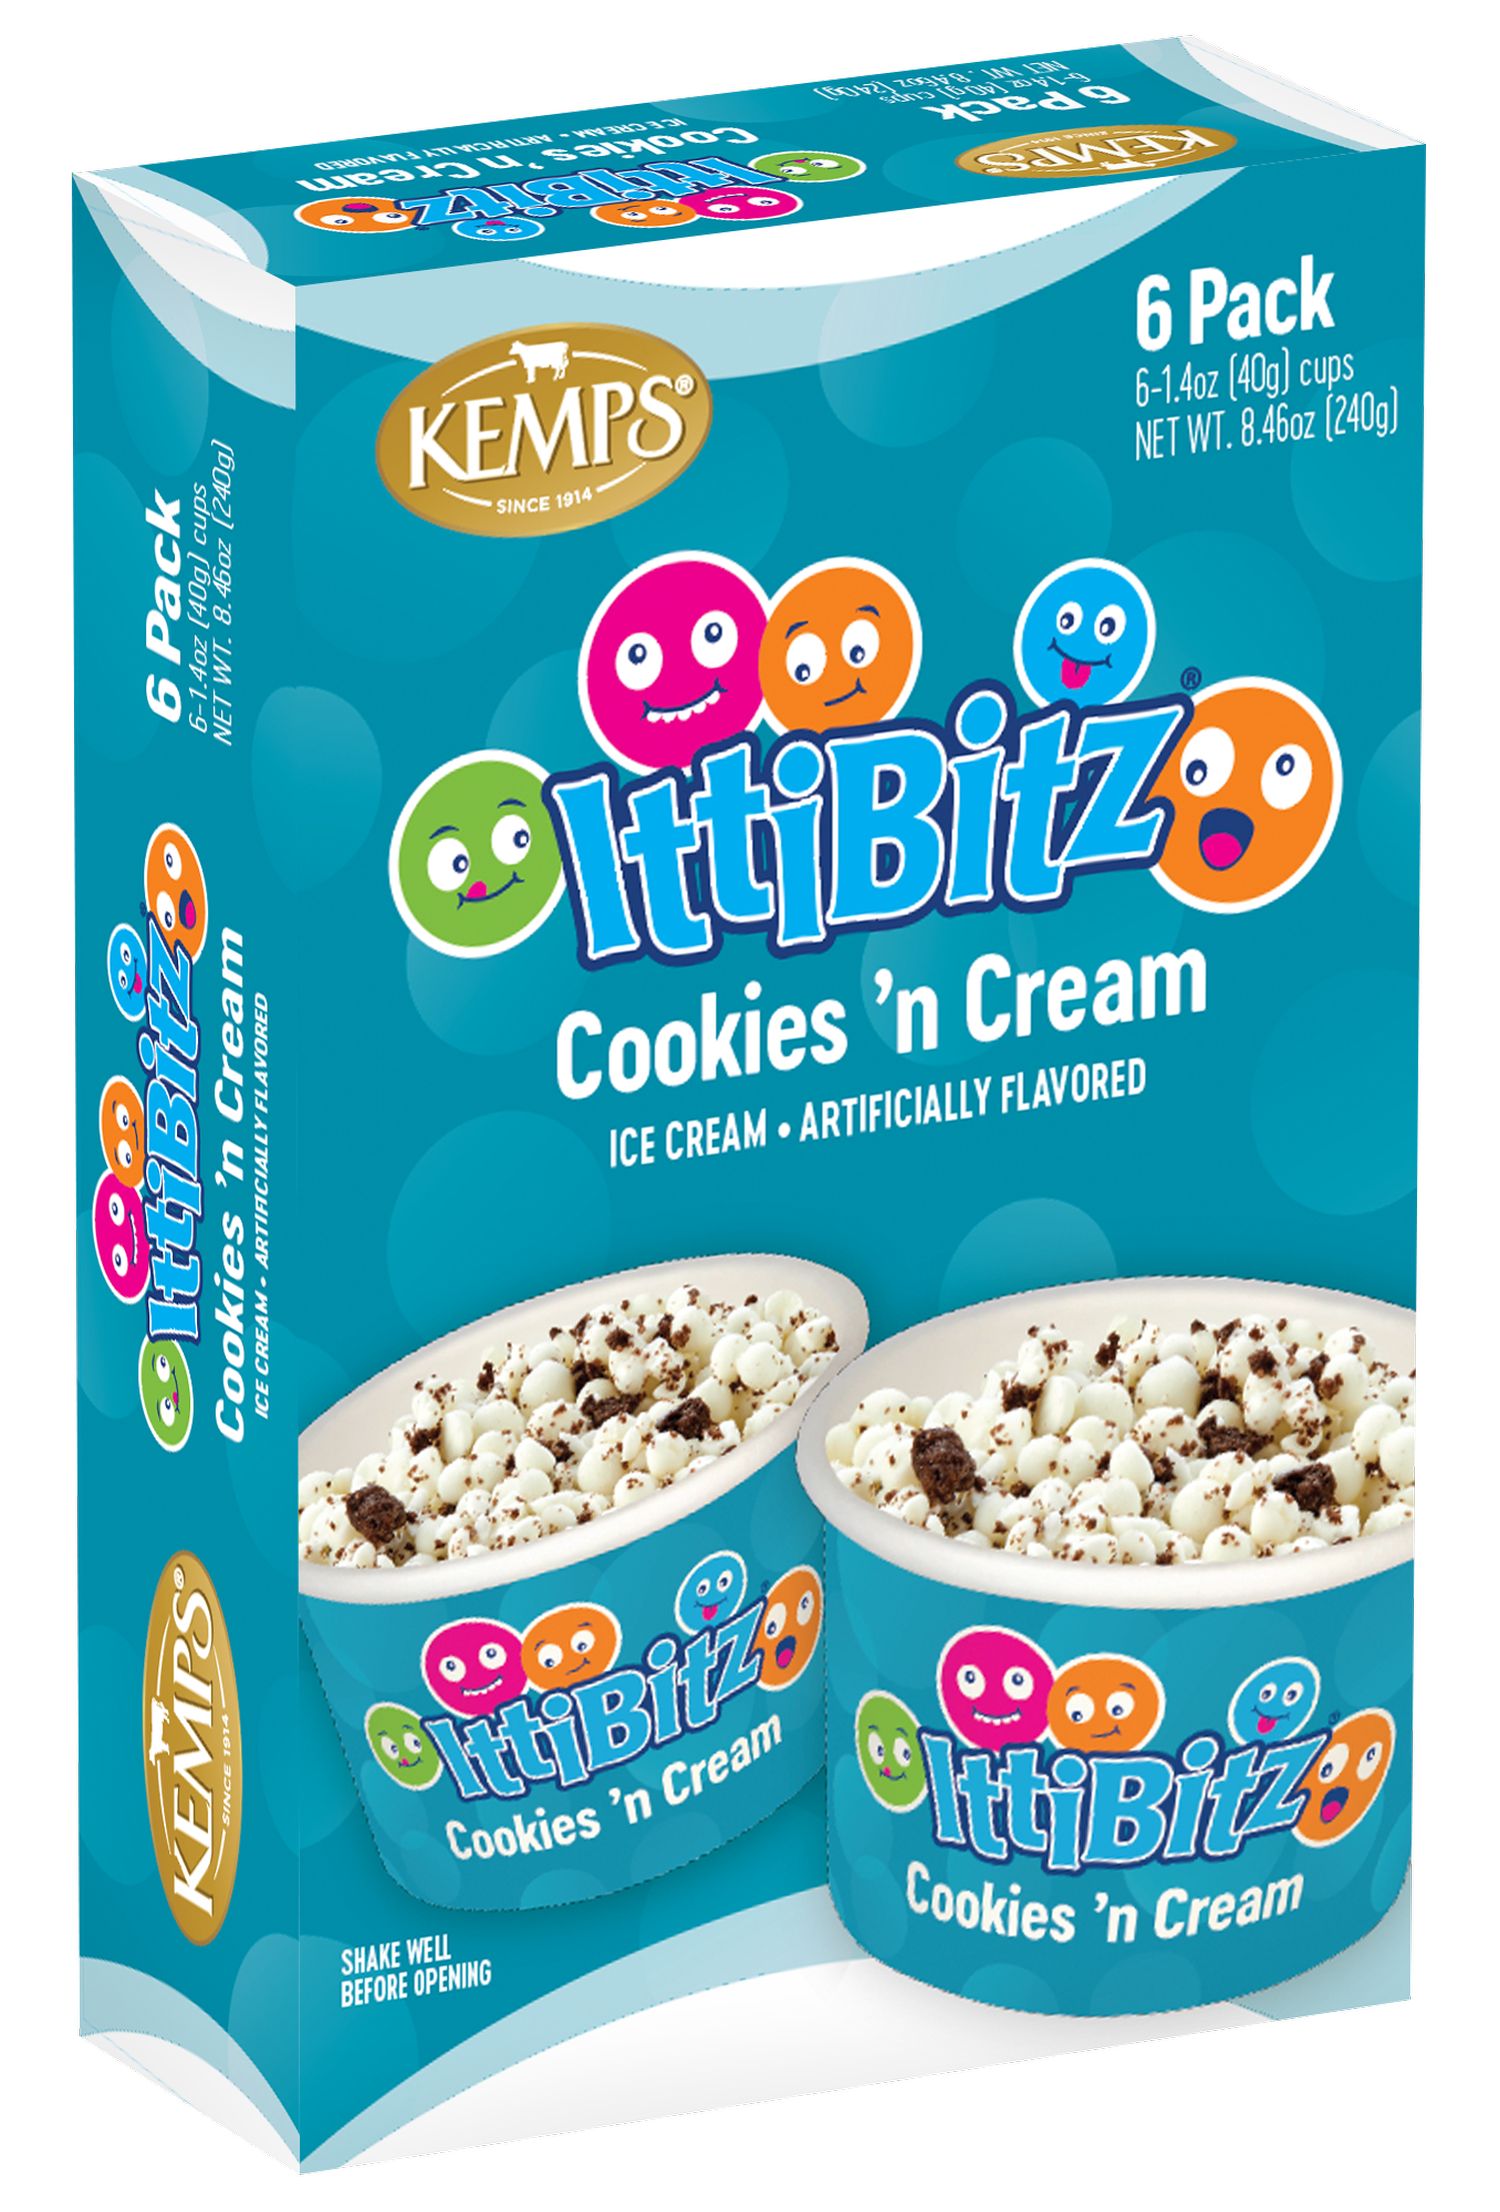 Kemps IttiBitz Cookies N Cream 1.4 oz / 6 Pak - image 1 of 1